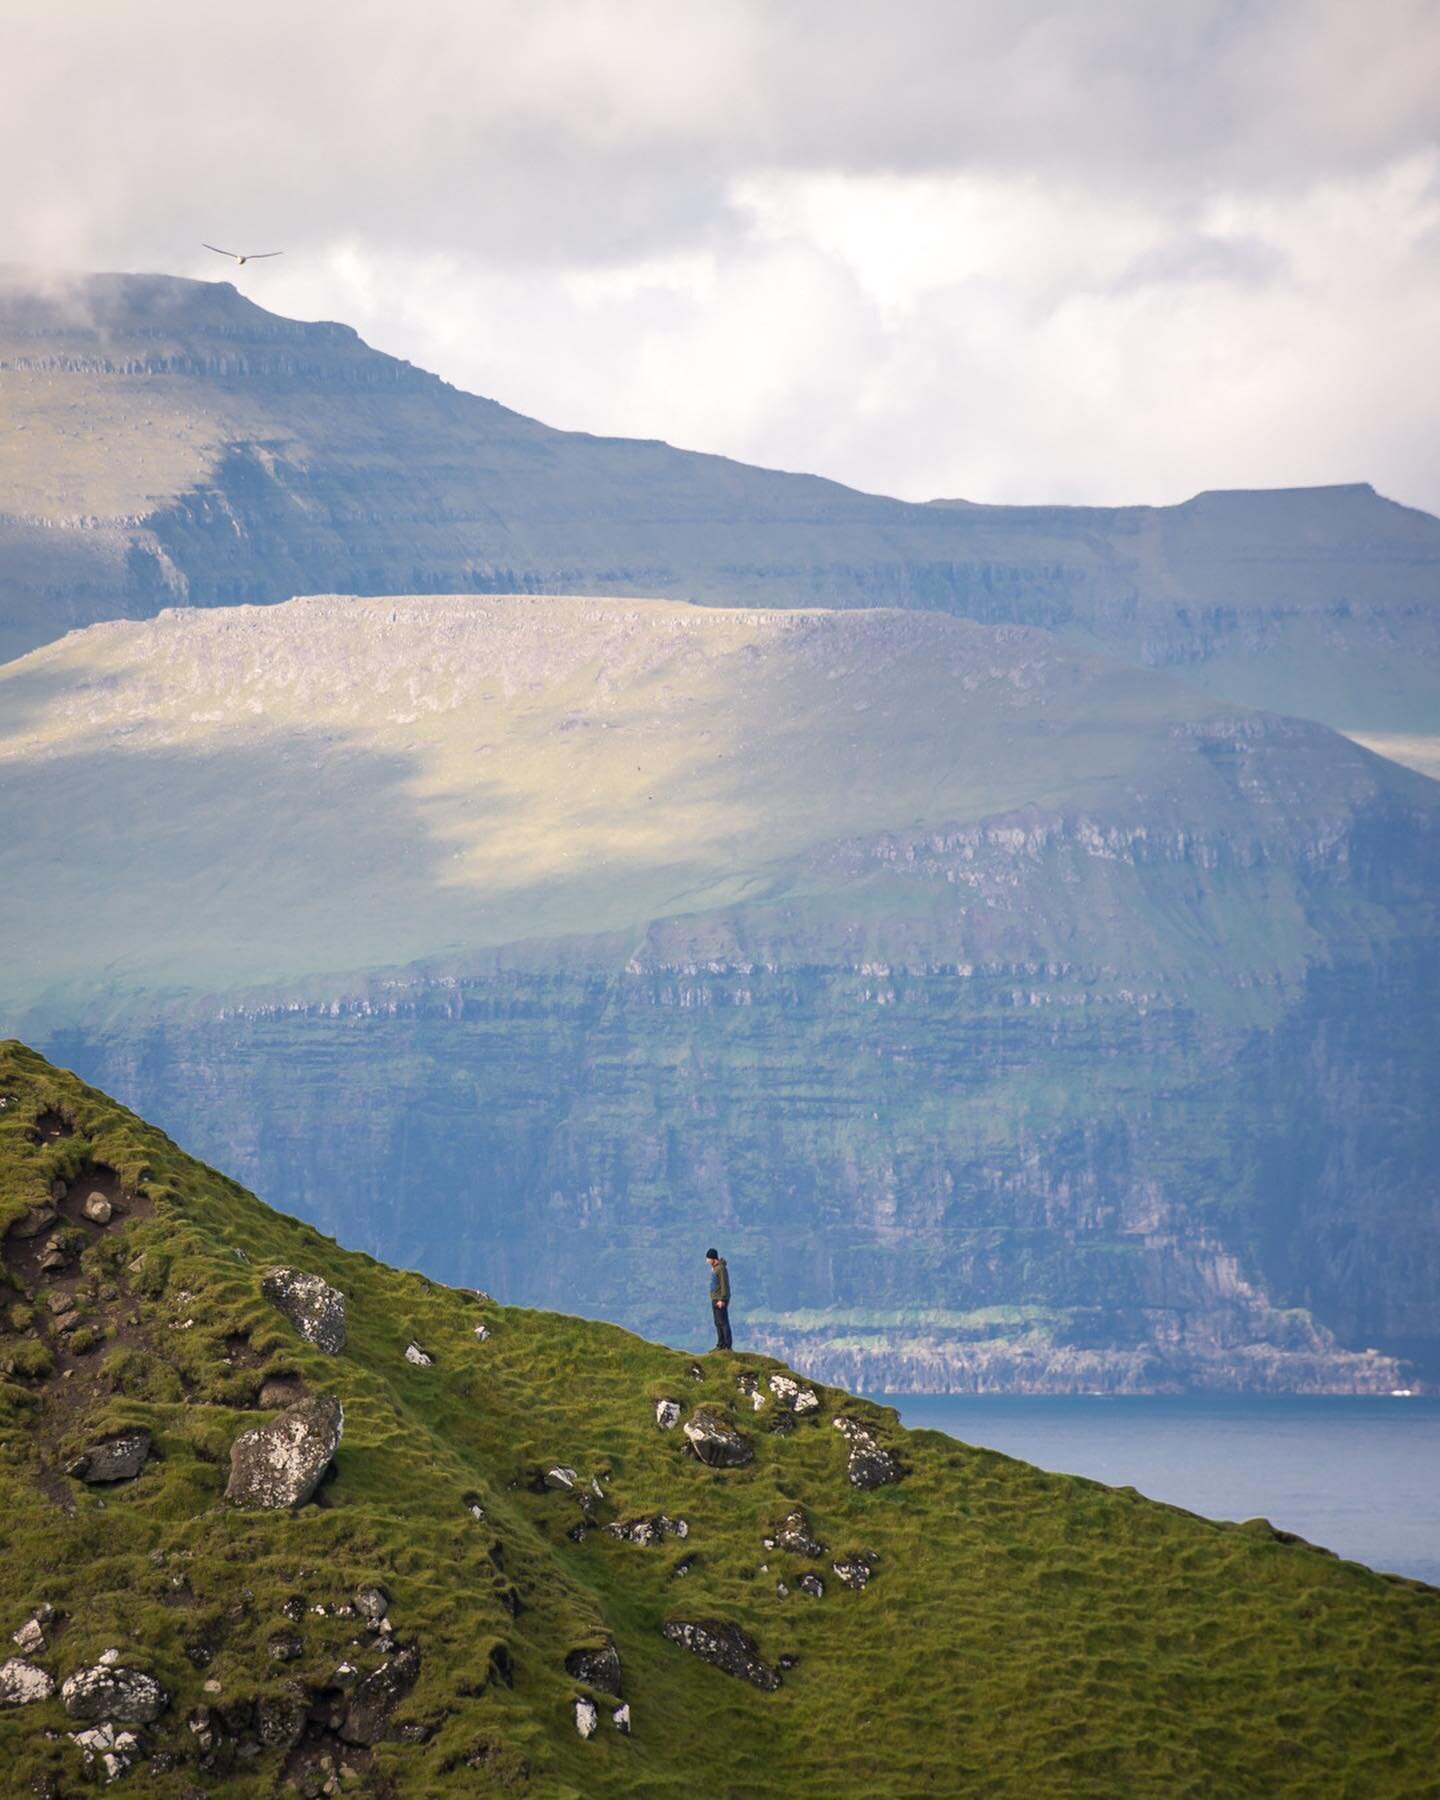 #Silhouettes at #FaroeIslands
.
.
.
.
.
.
.
.
.
.
#visitfaroeislands #atlanticairways #NordicsCollective #faroes #visualsoflife #beautifuldestinations #hiking #passionpassport #theimaged #adventureisrightthere #theweekoninstagram #travelblogger #outs